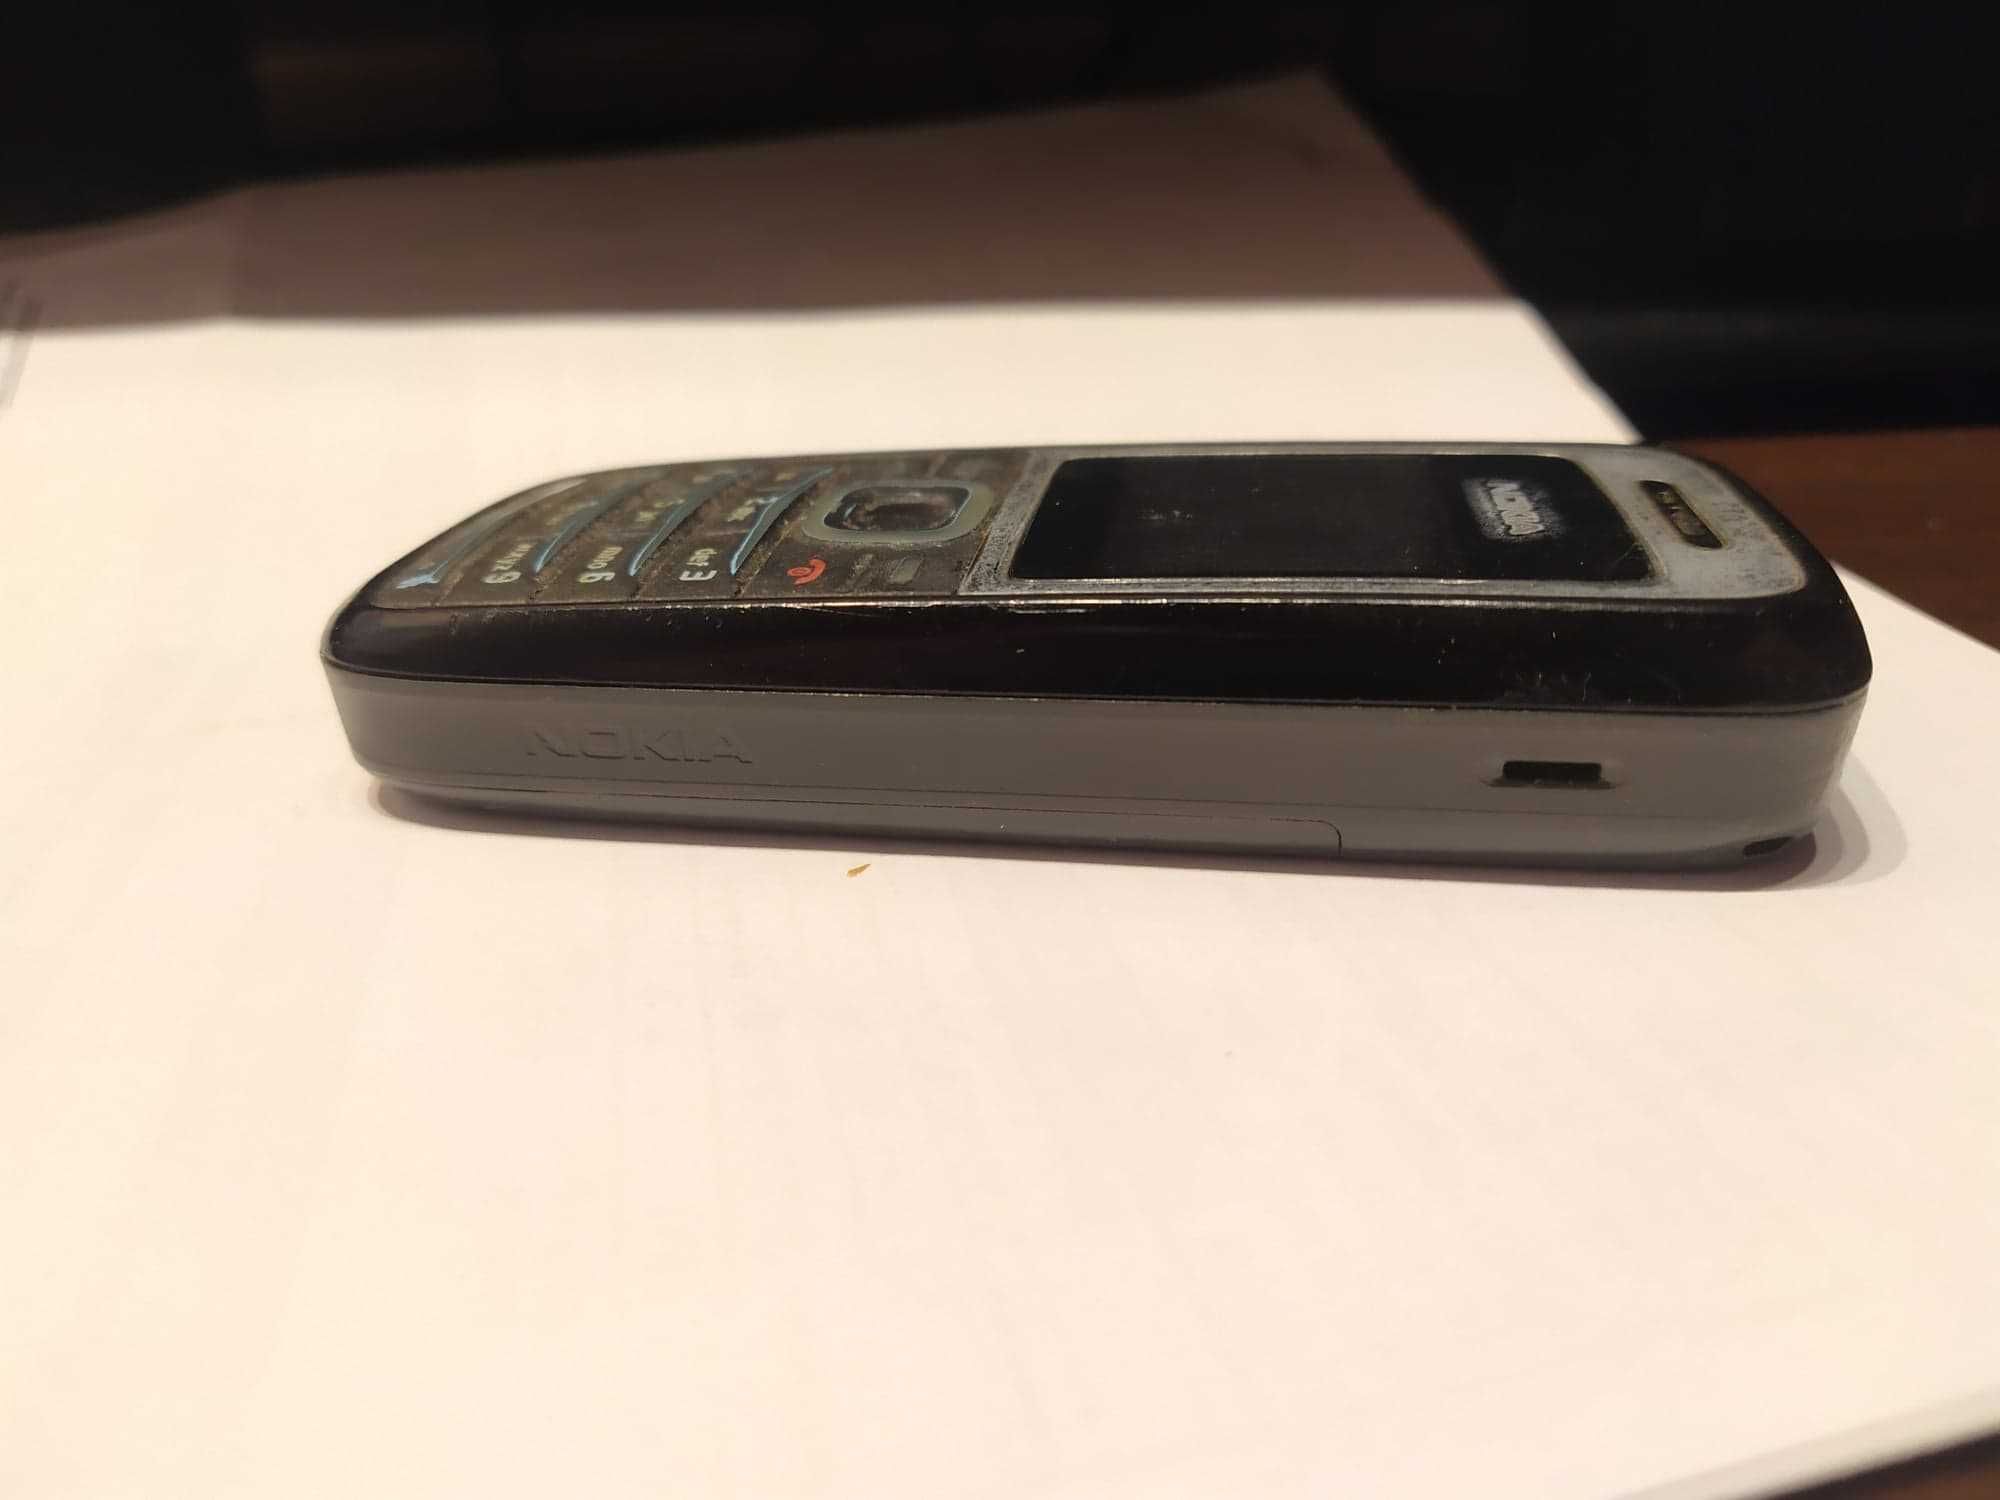 Nokia 1208 Stara i niejara